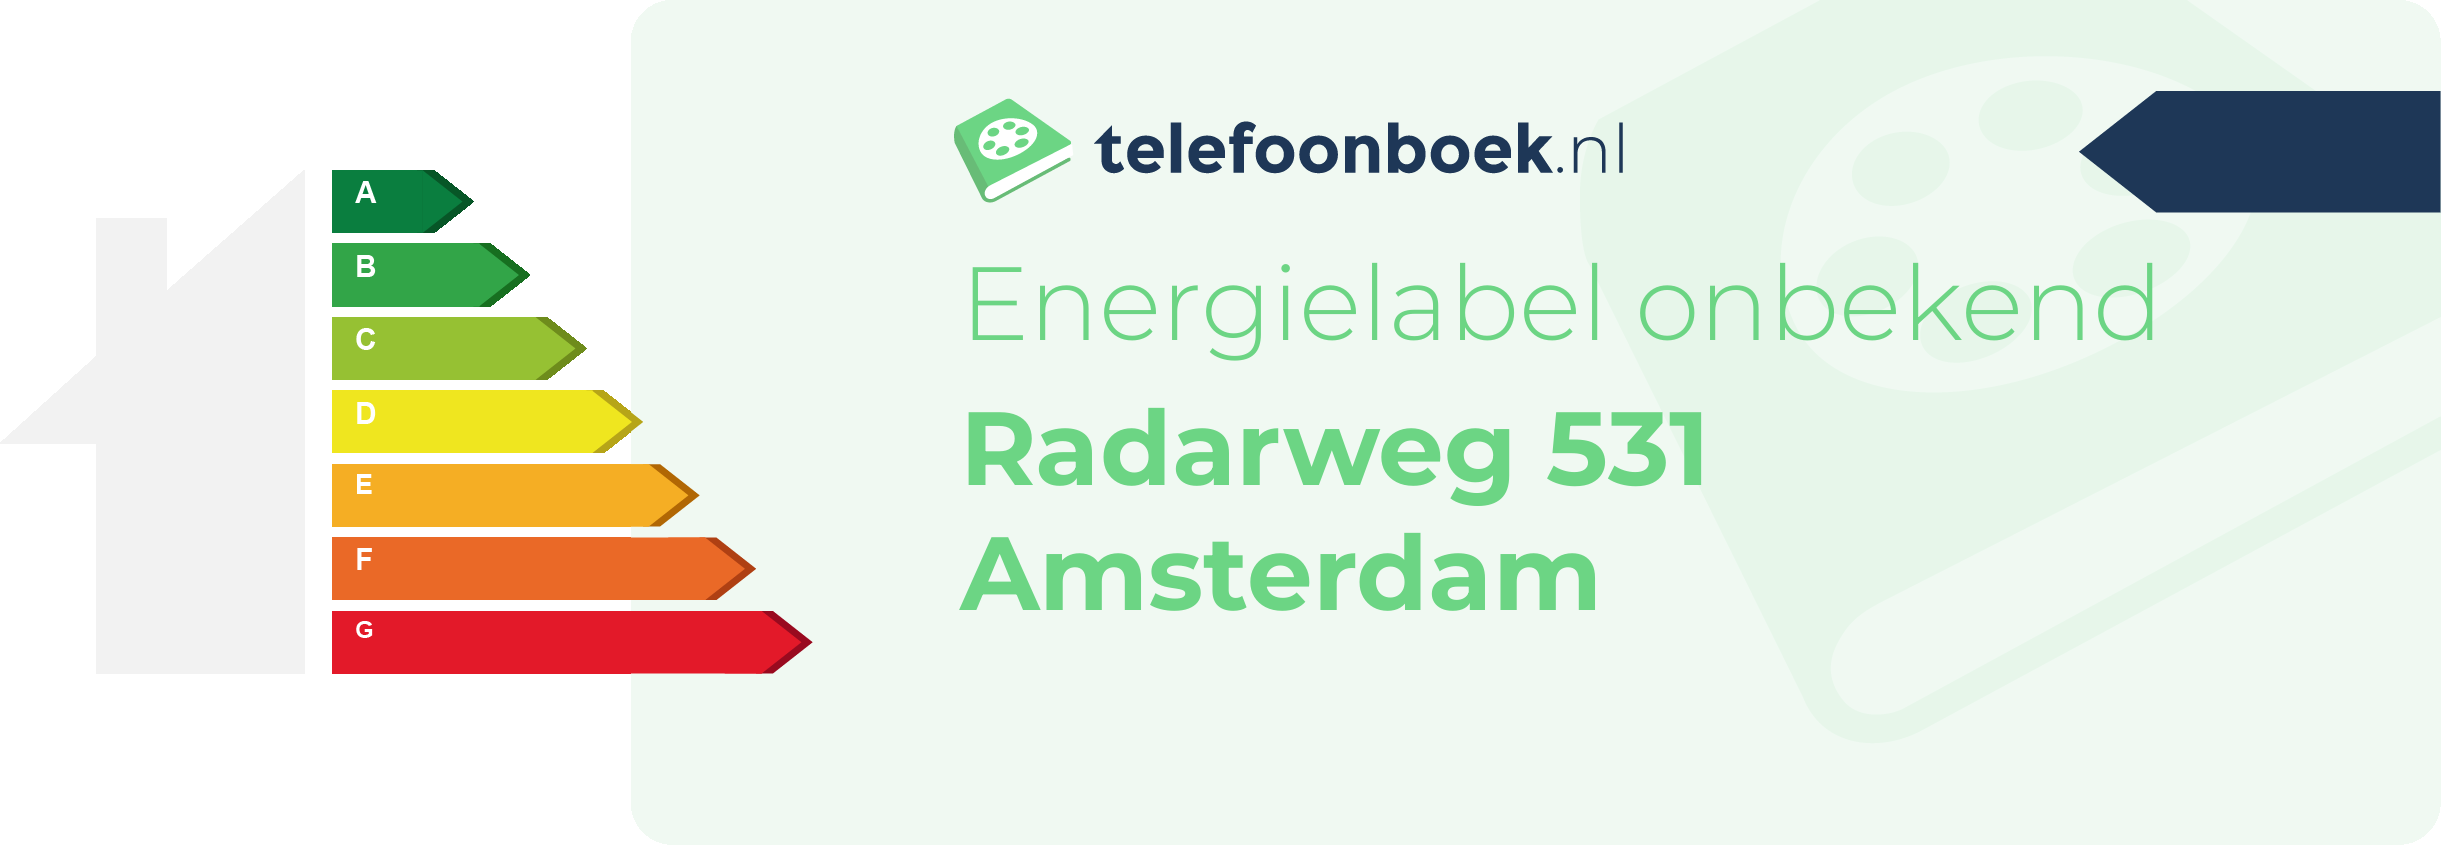 Energielabel Radarweg 531 Amsterdam